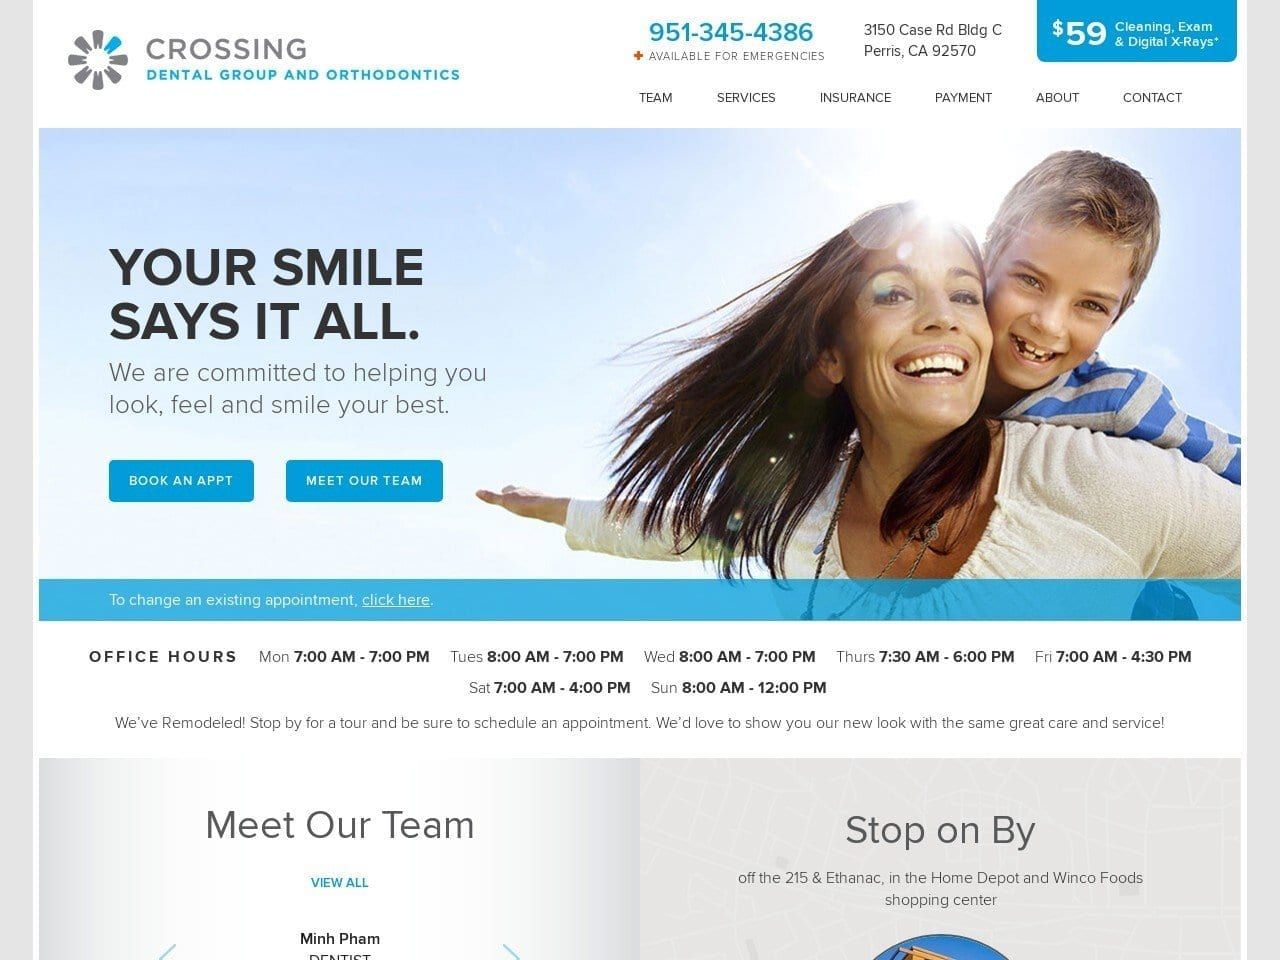 Crossing Dental Group Pham Minh B DDS Website Screenshot from crossingdentalgroup.com